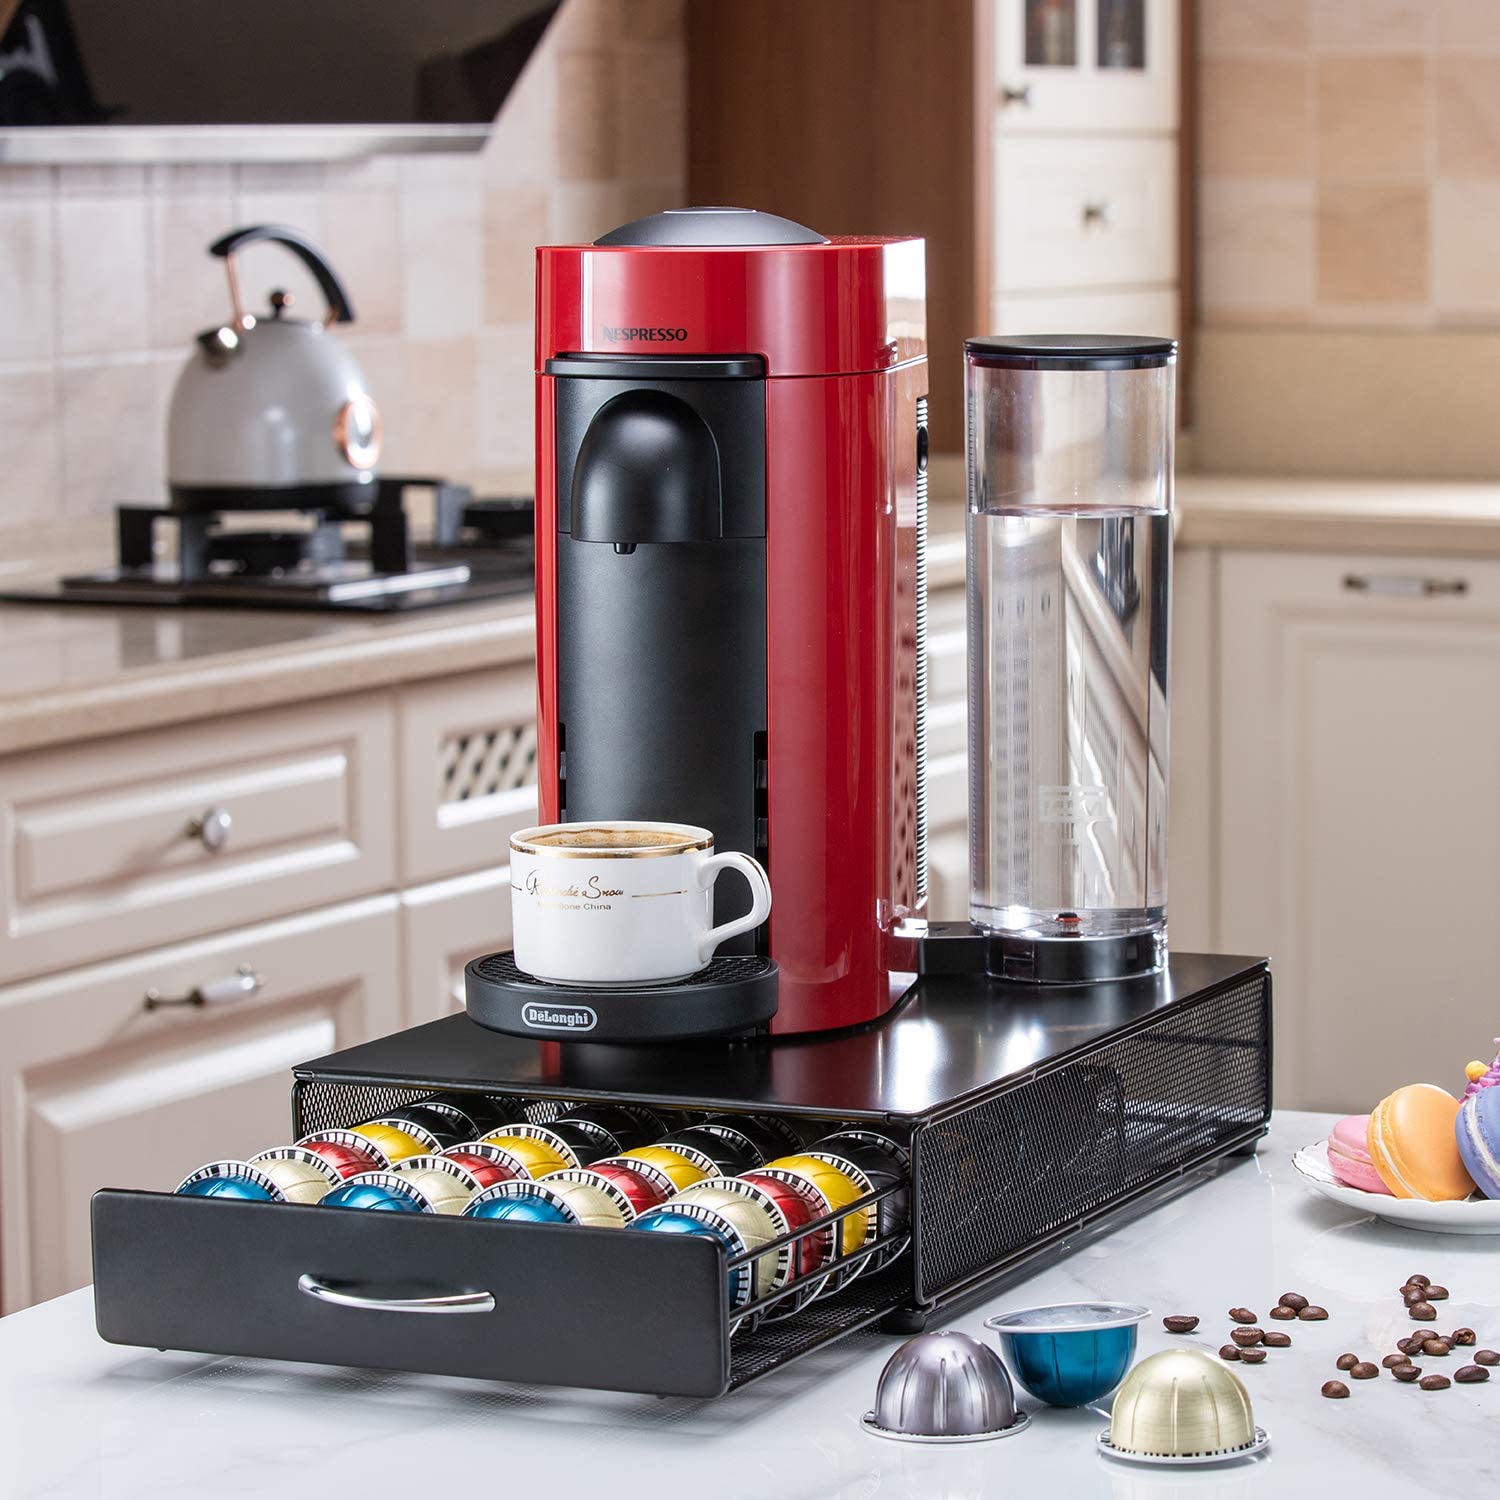 nespresso machine on counter with mug of coffee